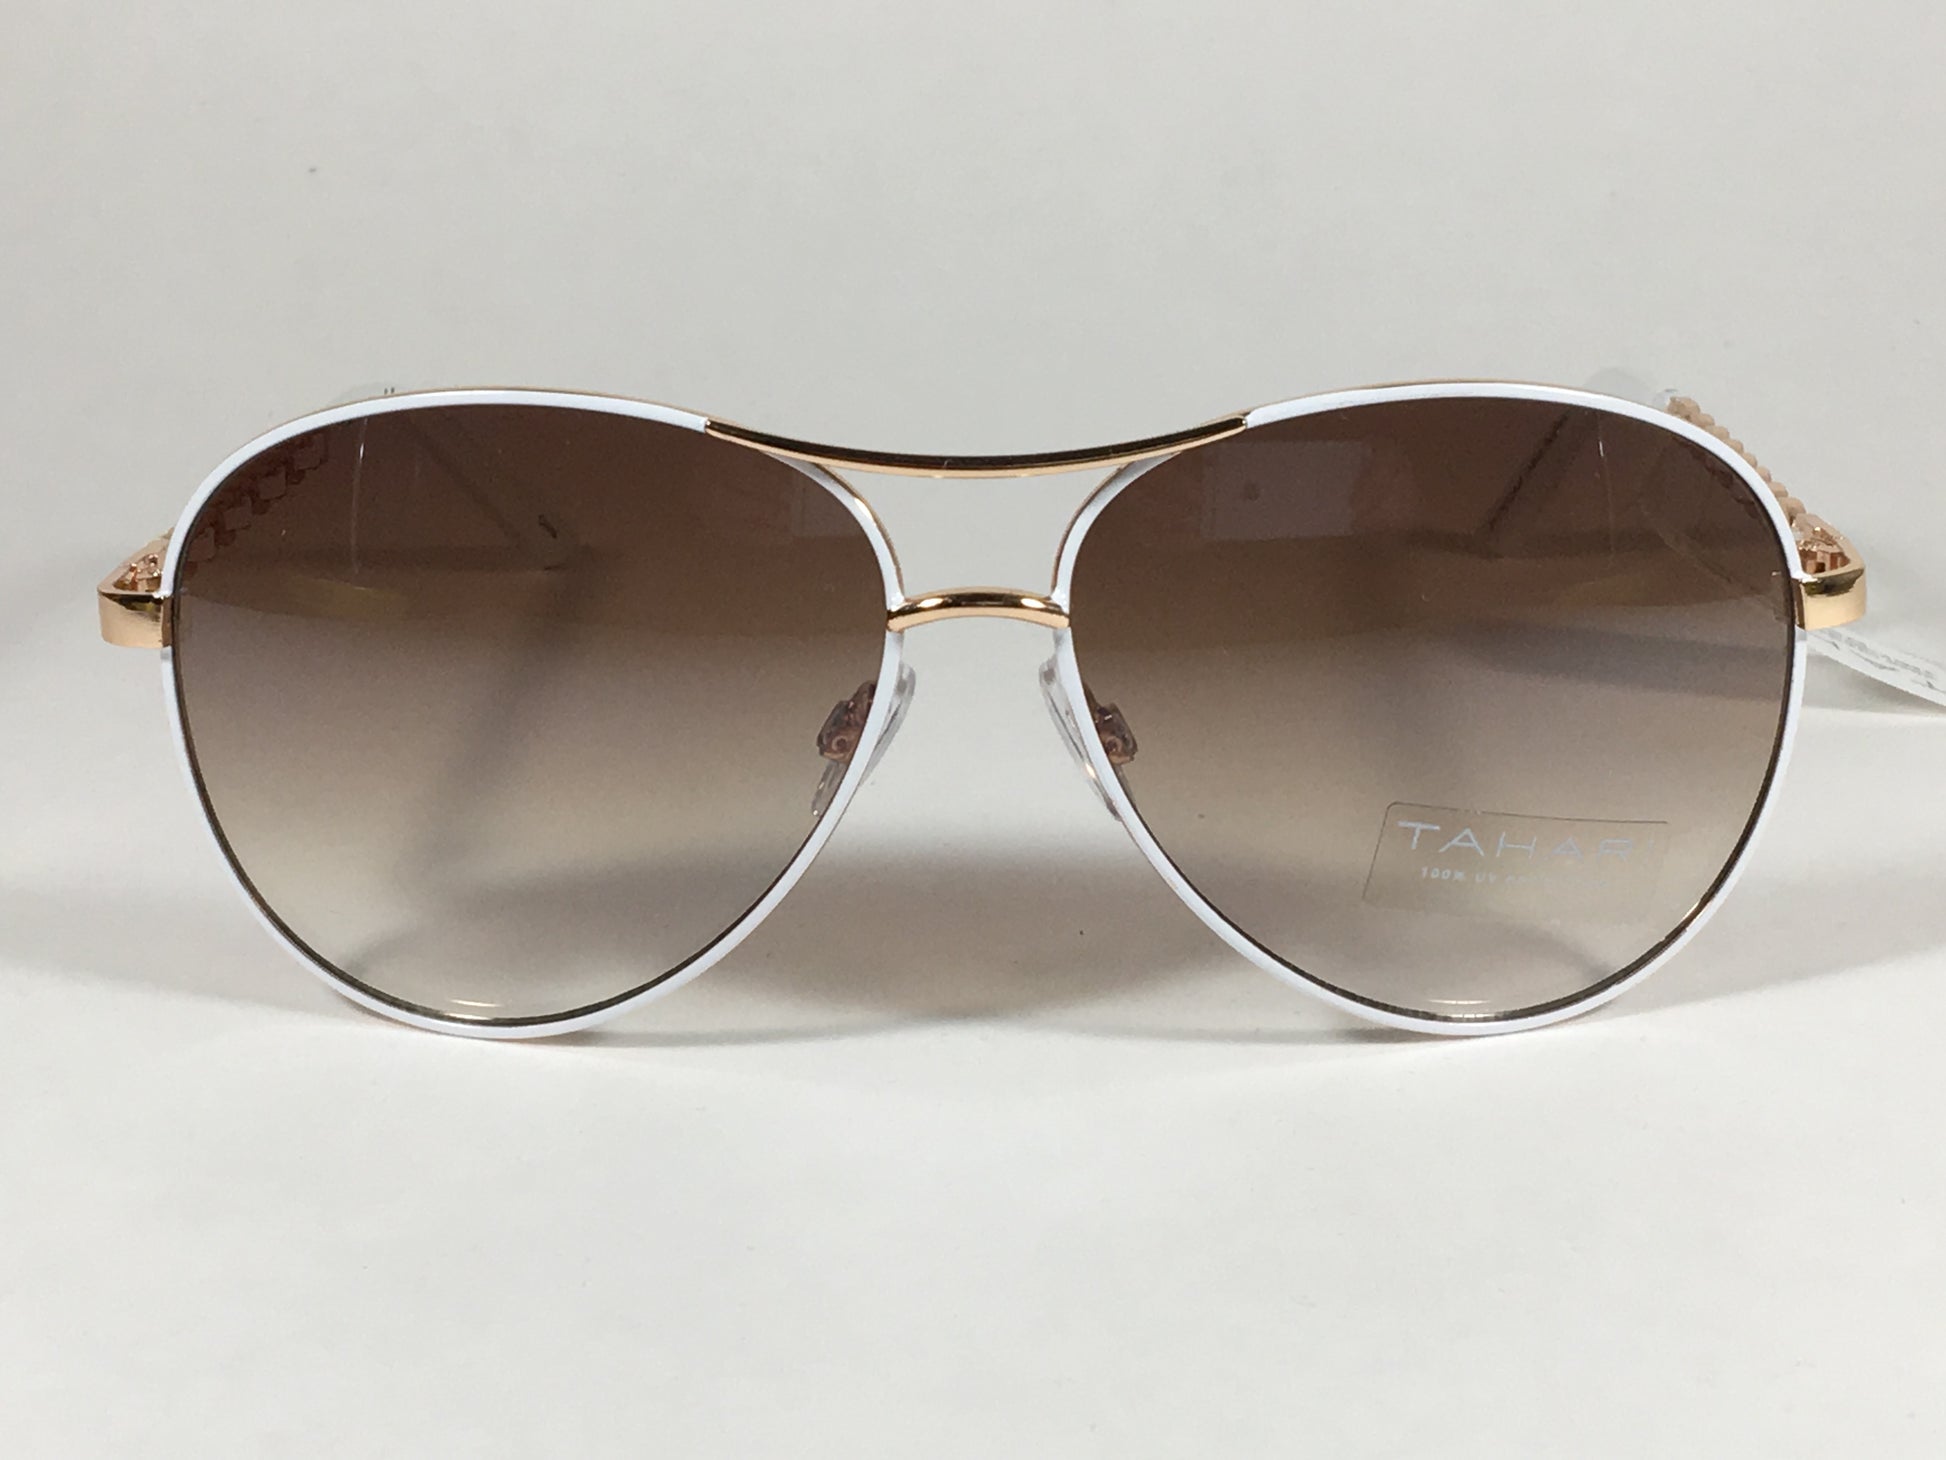 Tahari Aviator Sunglasses Rose Gold White Leather Chord Gradient Lens Th649 - Sunglasses